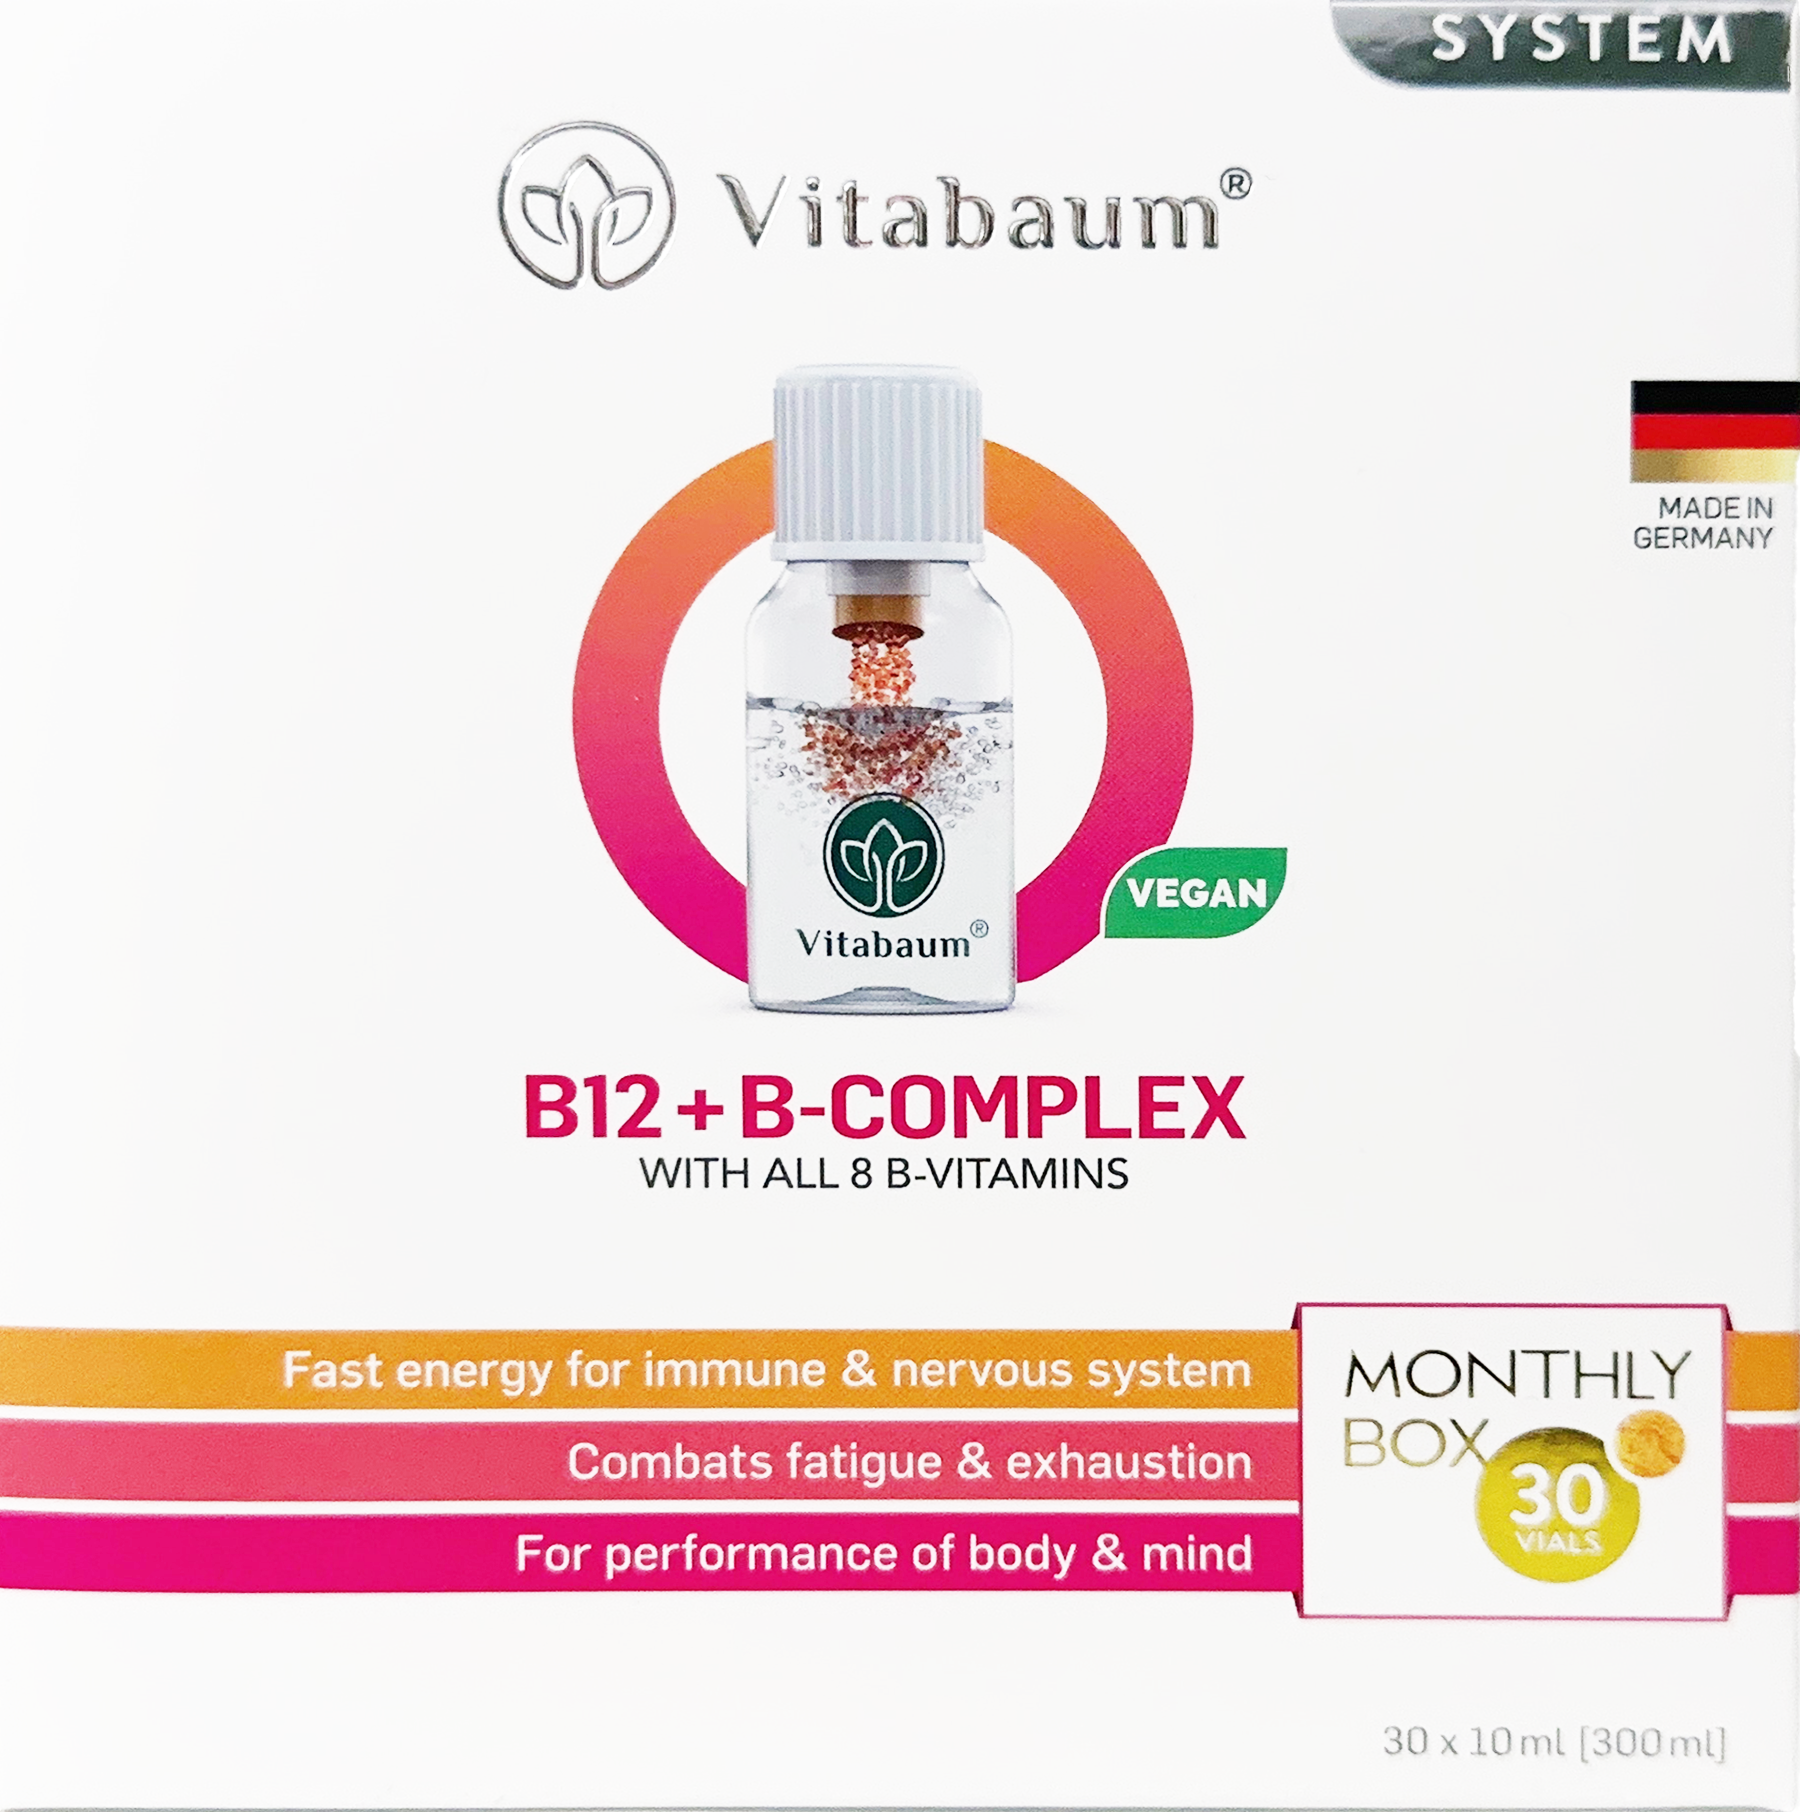 Vitabaum® B12 + B-Complex - Dietary supplement with all 8 essential B vitamins